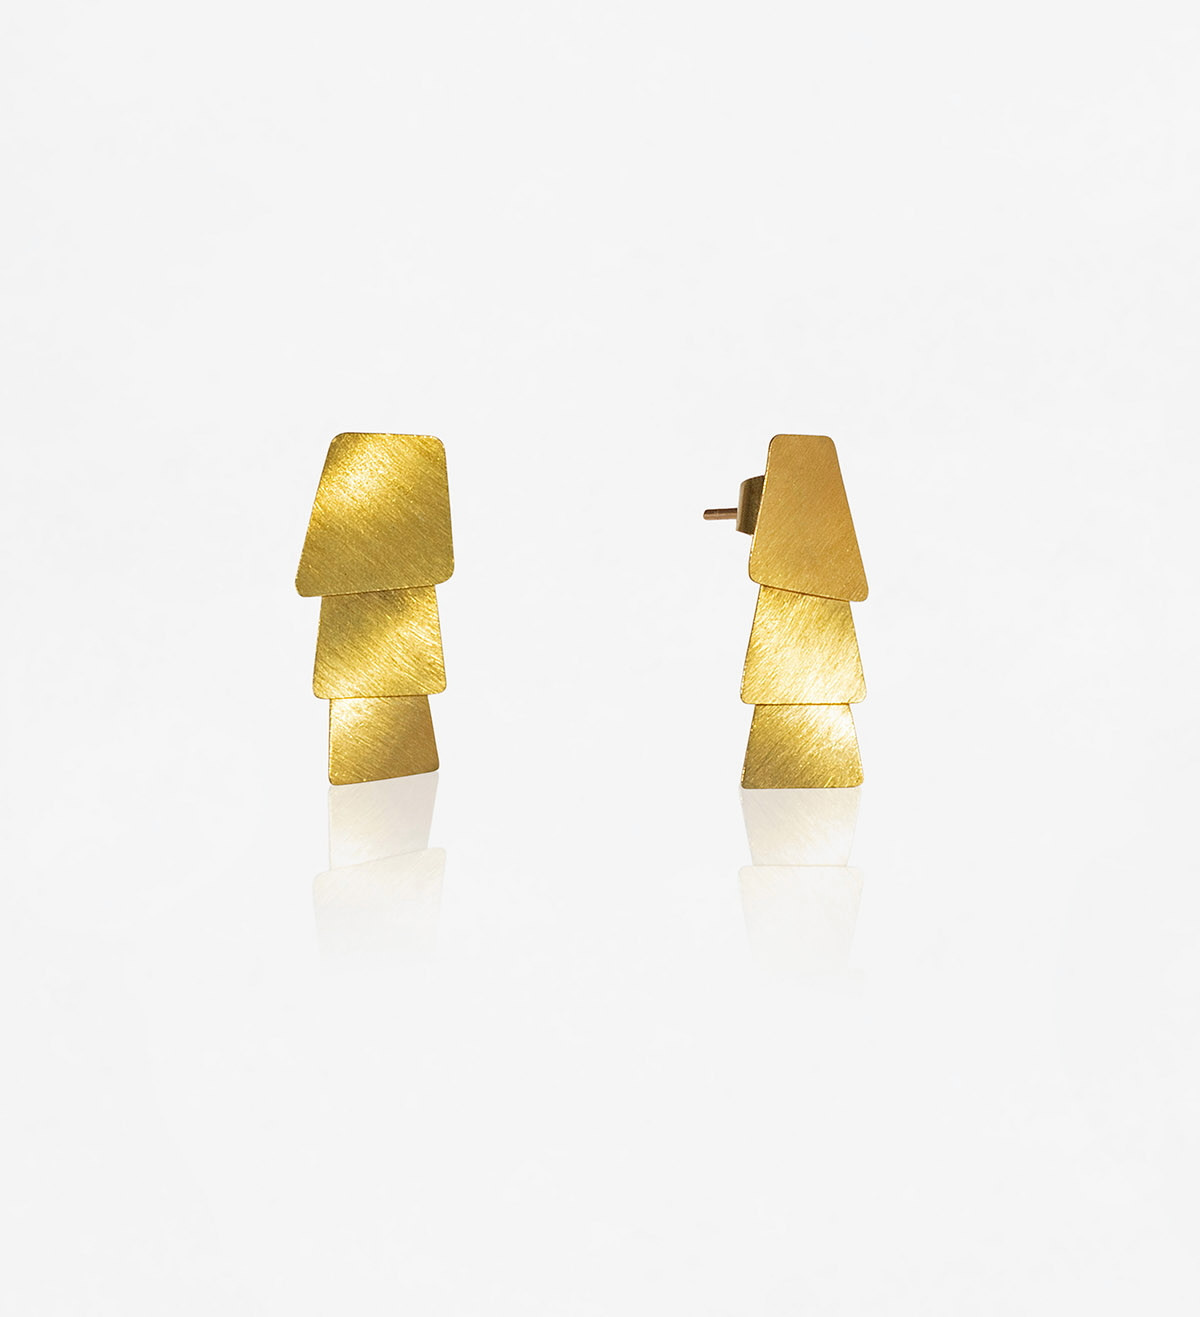 18k gold earrings Aire 3 pcs 30mm